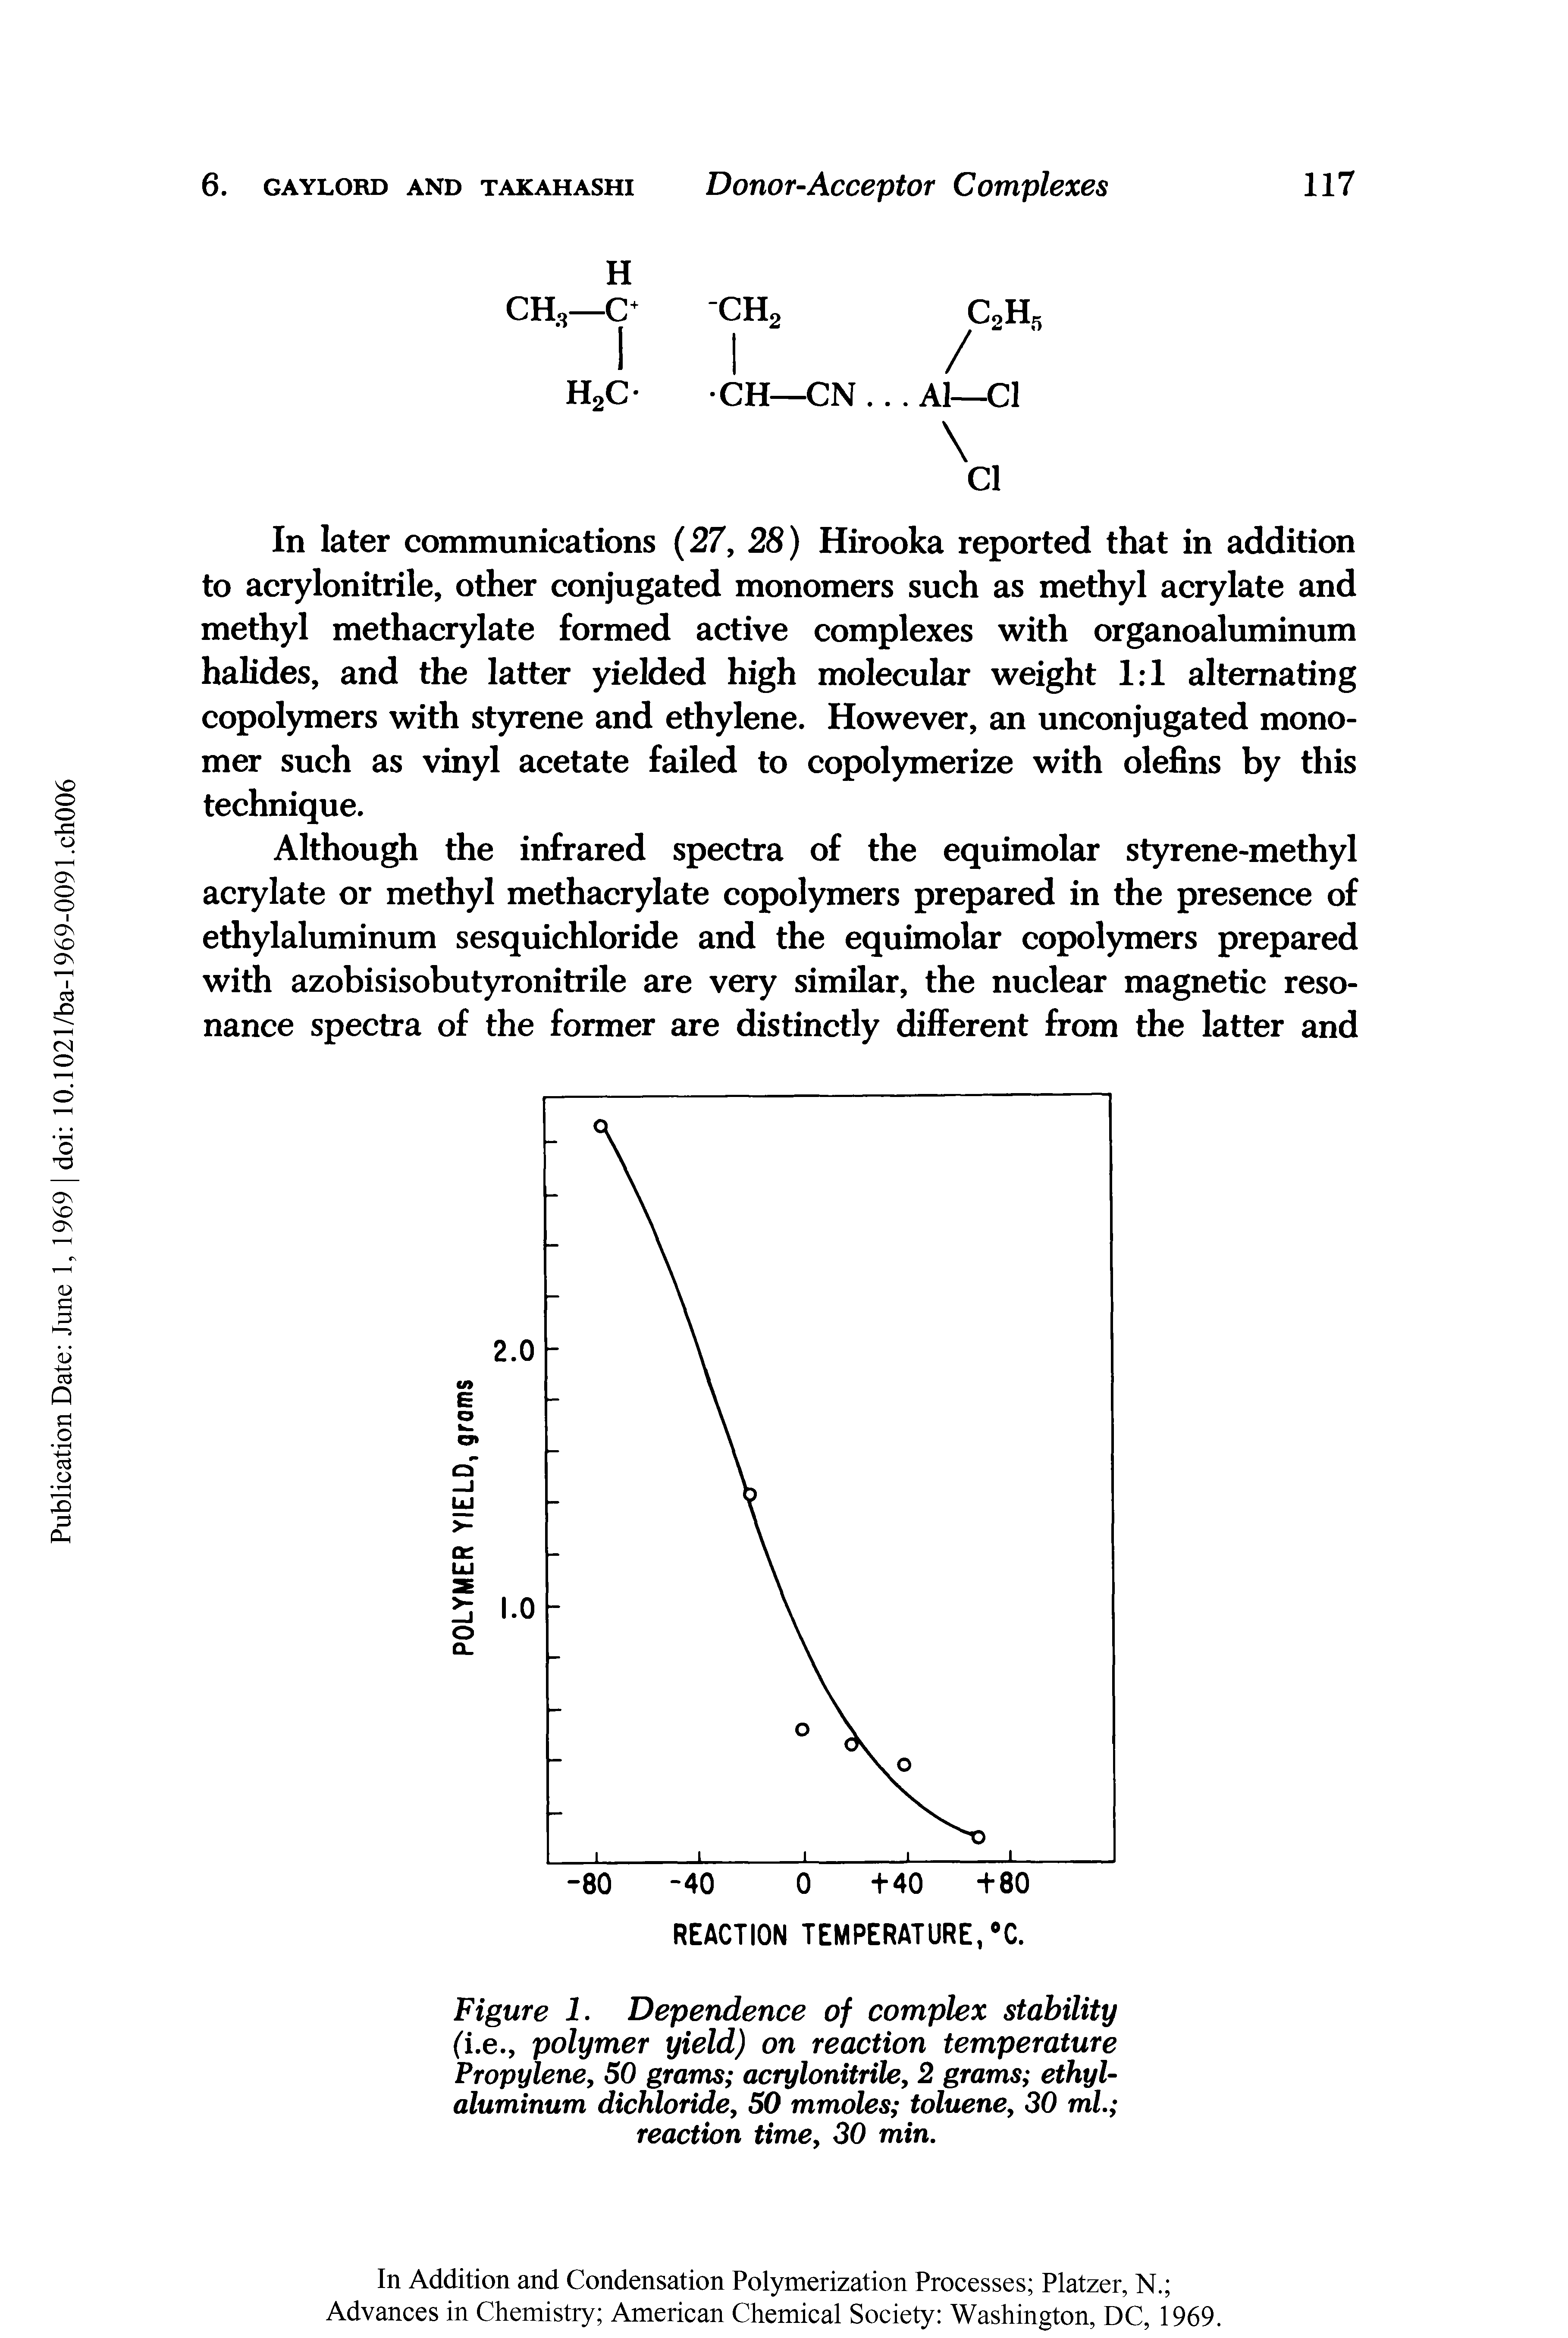 Figure 1. Dependence of complex stability (i.e., polymer yield) on reaction temperature Propylene, 50 grams acrylonitrile, 2 grams ethyl-aluminum dichloride, 50 mmoles toluene, 30 ml. reaction time, 30 min.